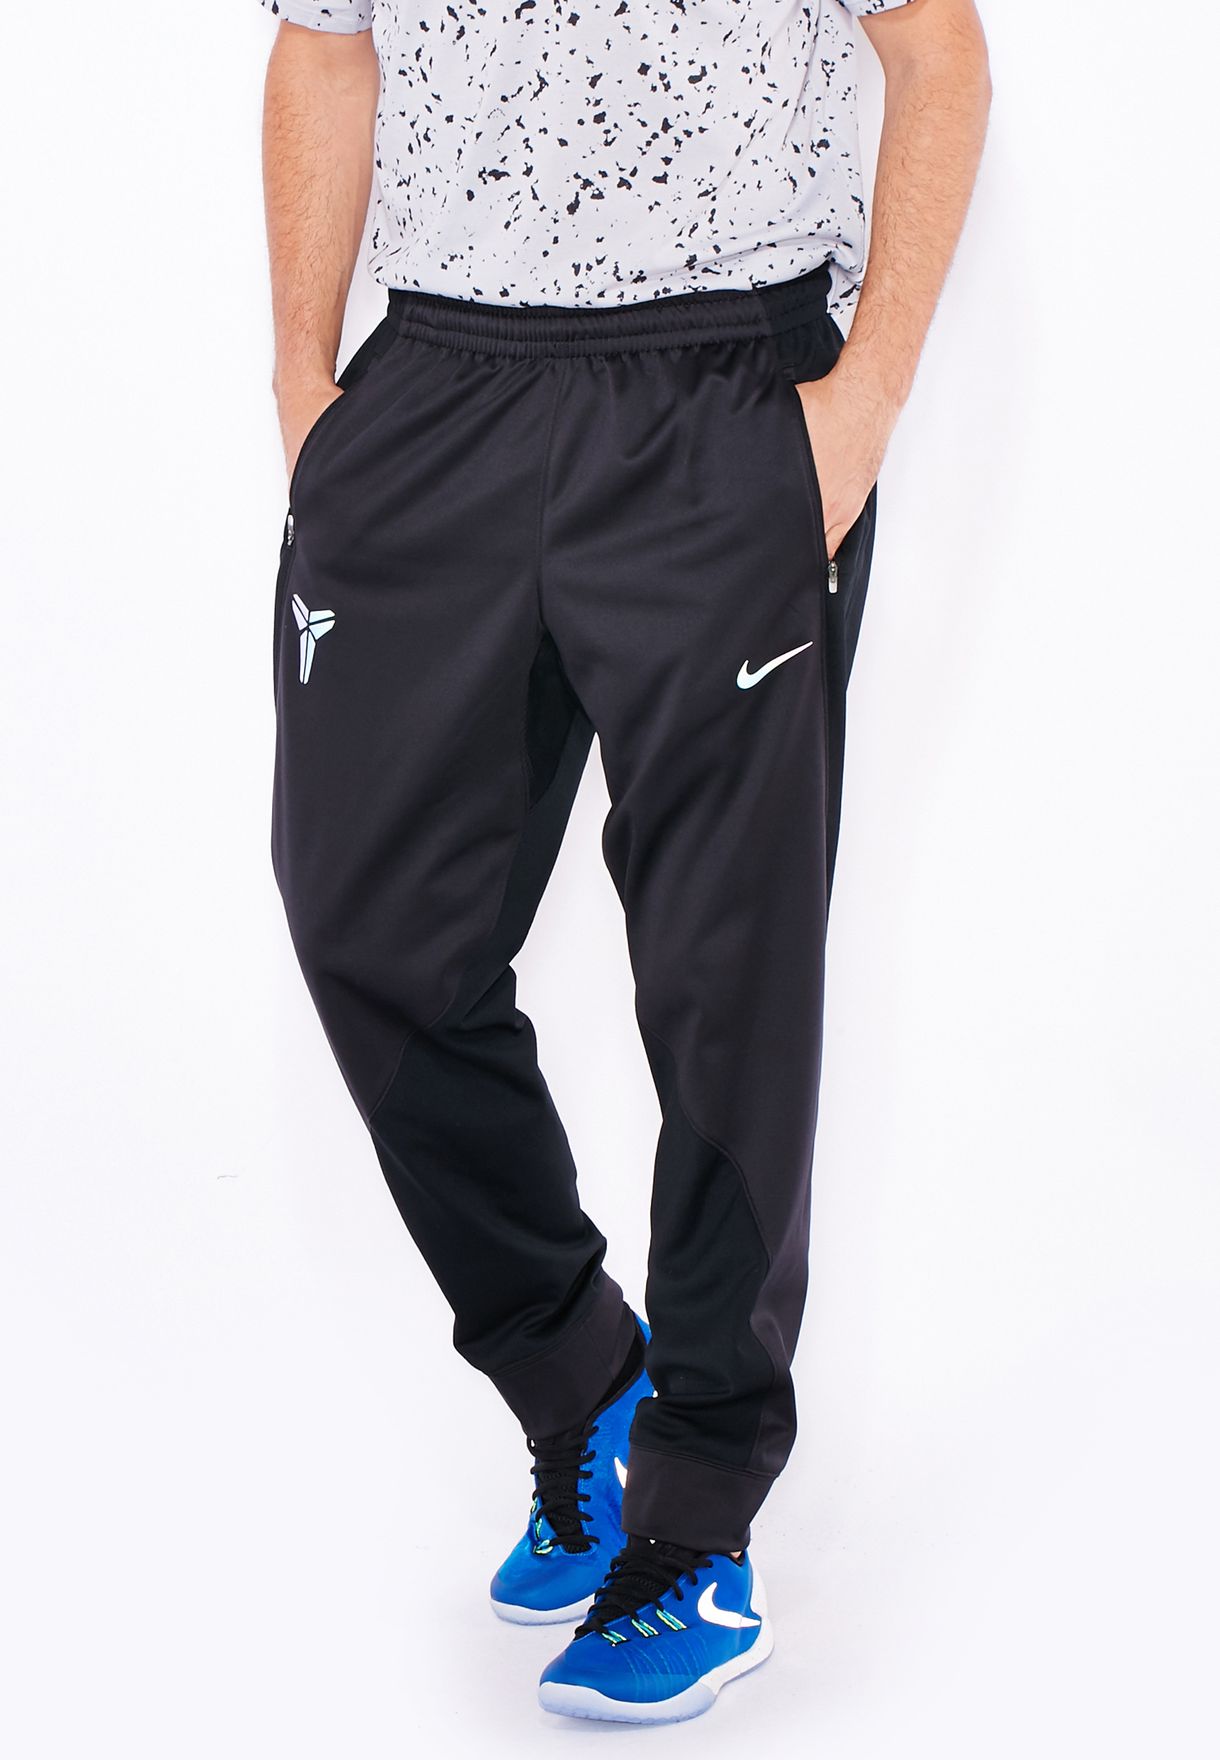 Kobe Mambula Elite Sweatpants for Men 